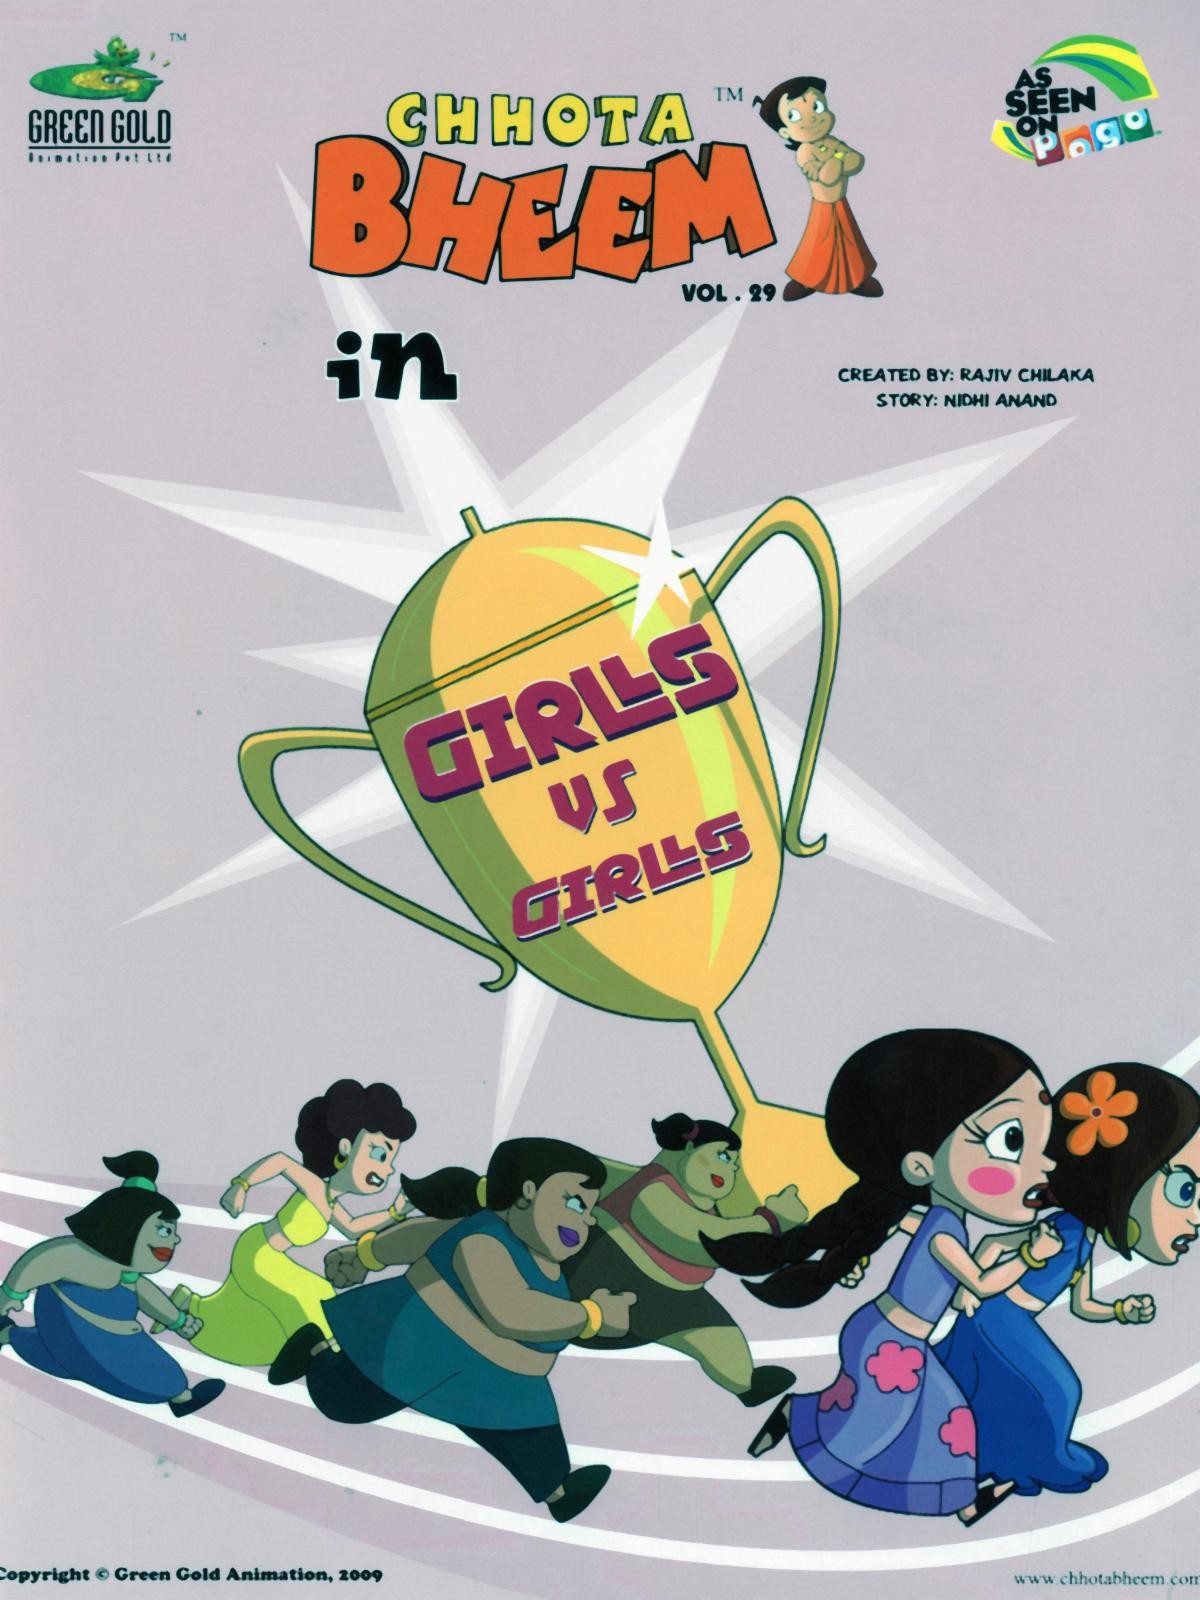 Chhota Bheem Vol-29 in Girls vs Girls